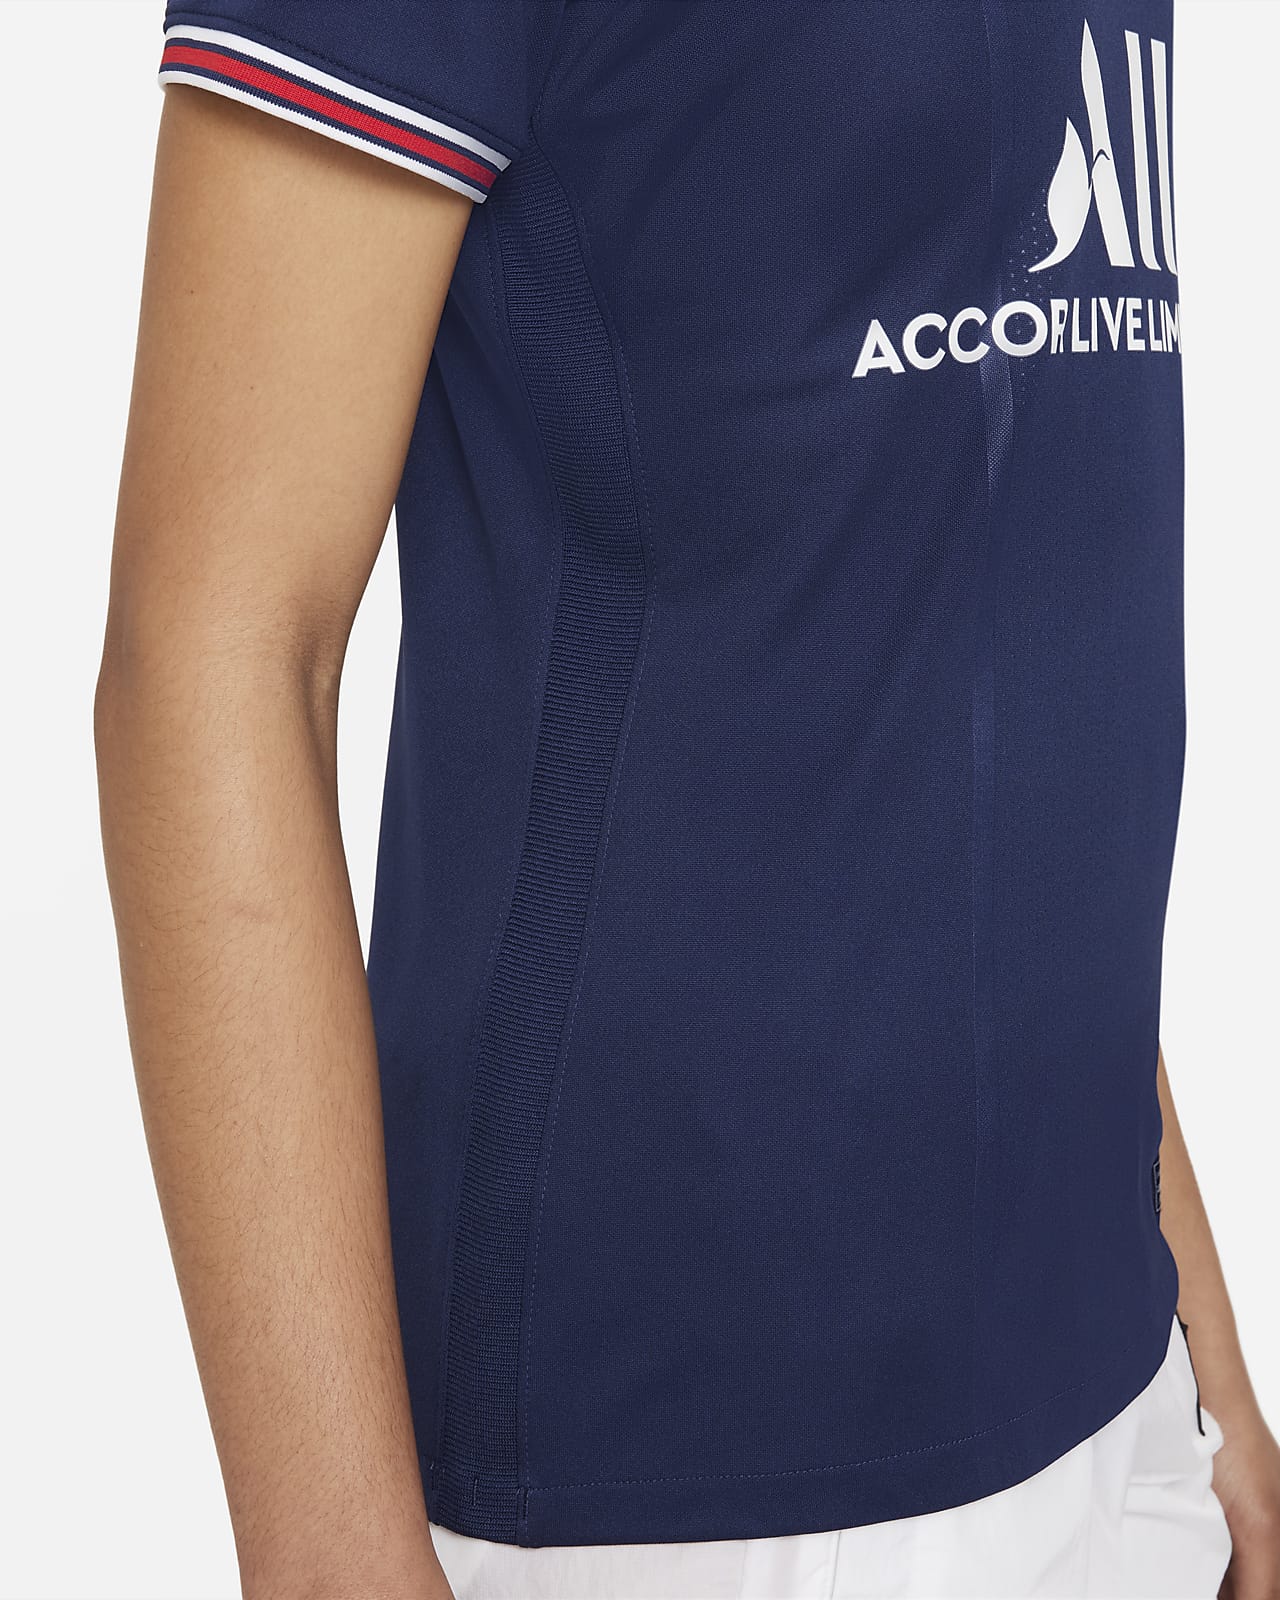 Paris Saint-Germain 2021/22 Stadium Home Women's Football Shirt. Nike GB